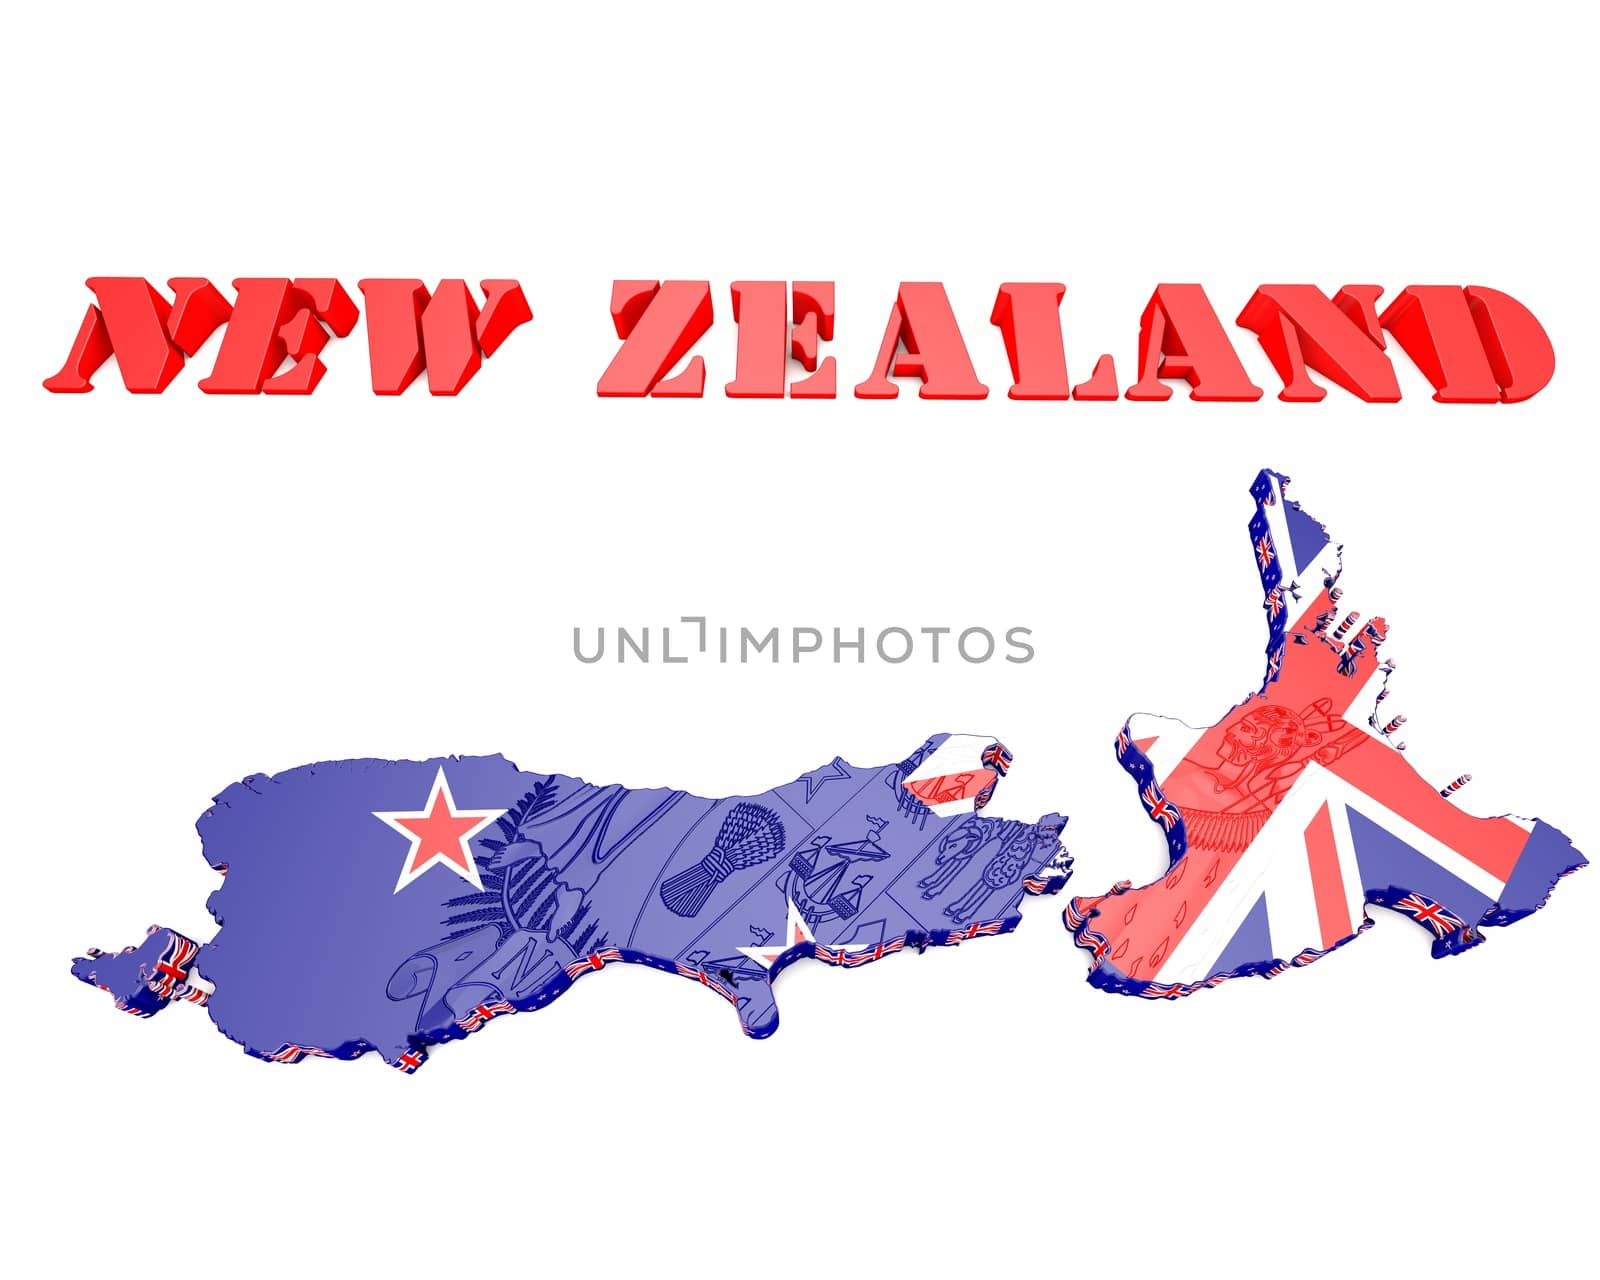 Map illustration of New Zealand by dolfinvik